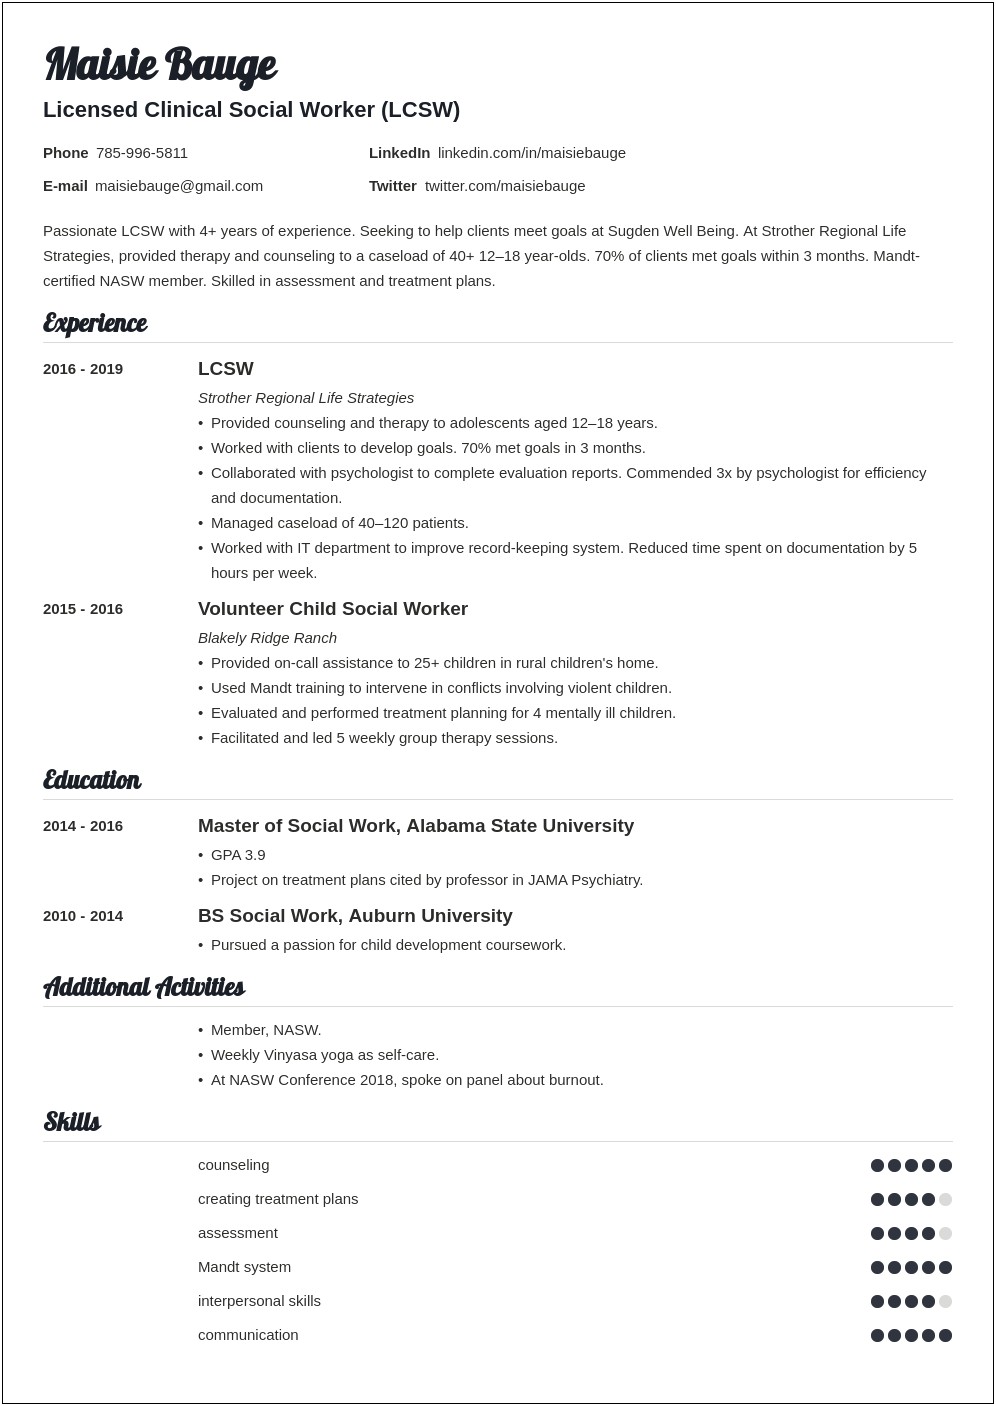 Job Summary For Social Worker For Resume